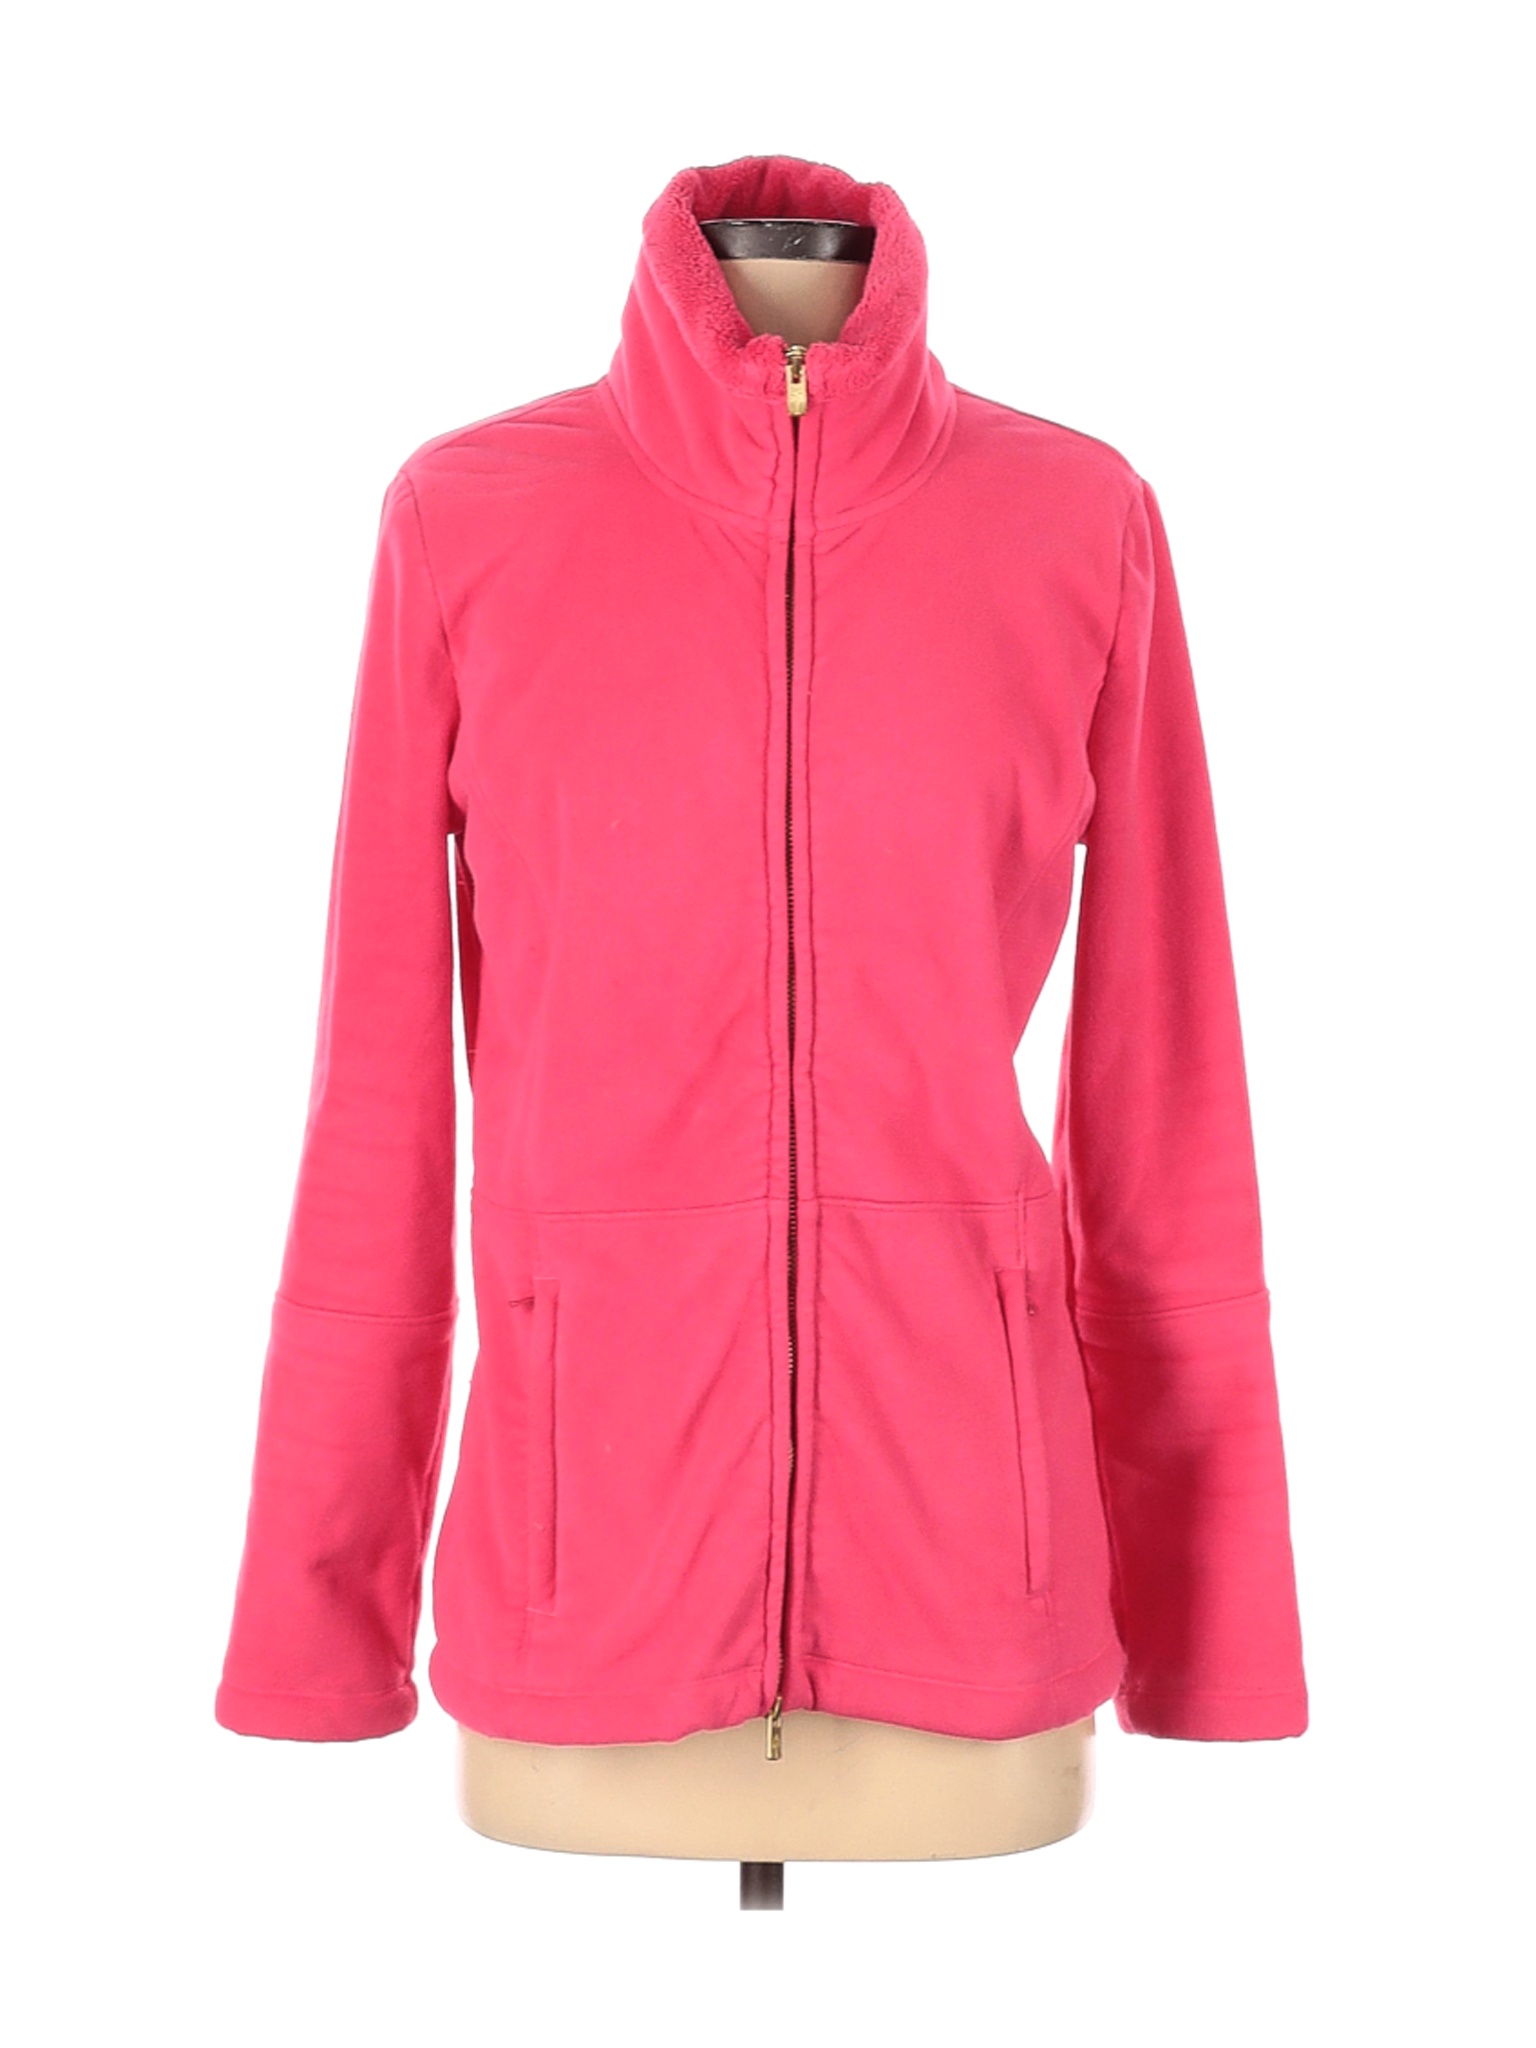 Lilly Pulitzer Women Pink Fleece S | eBay